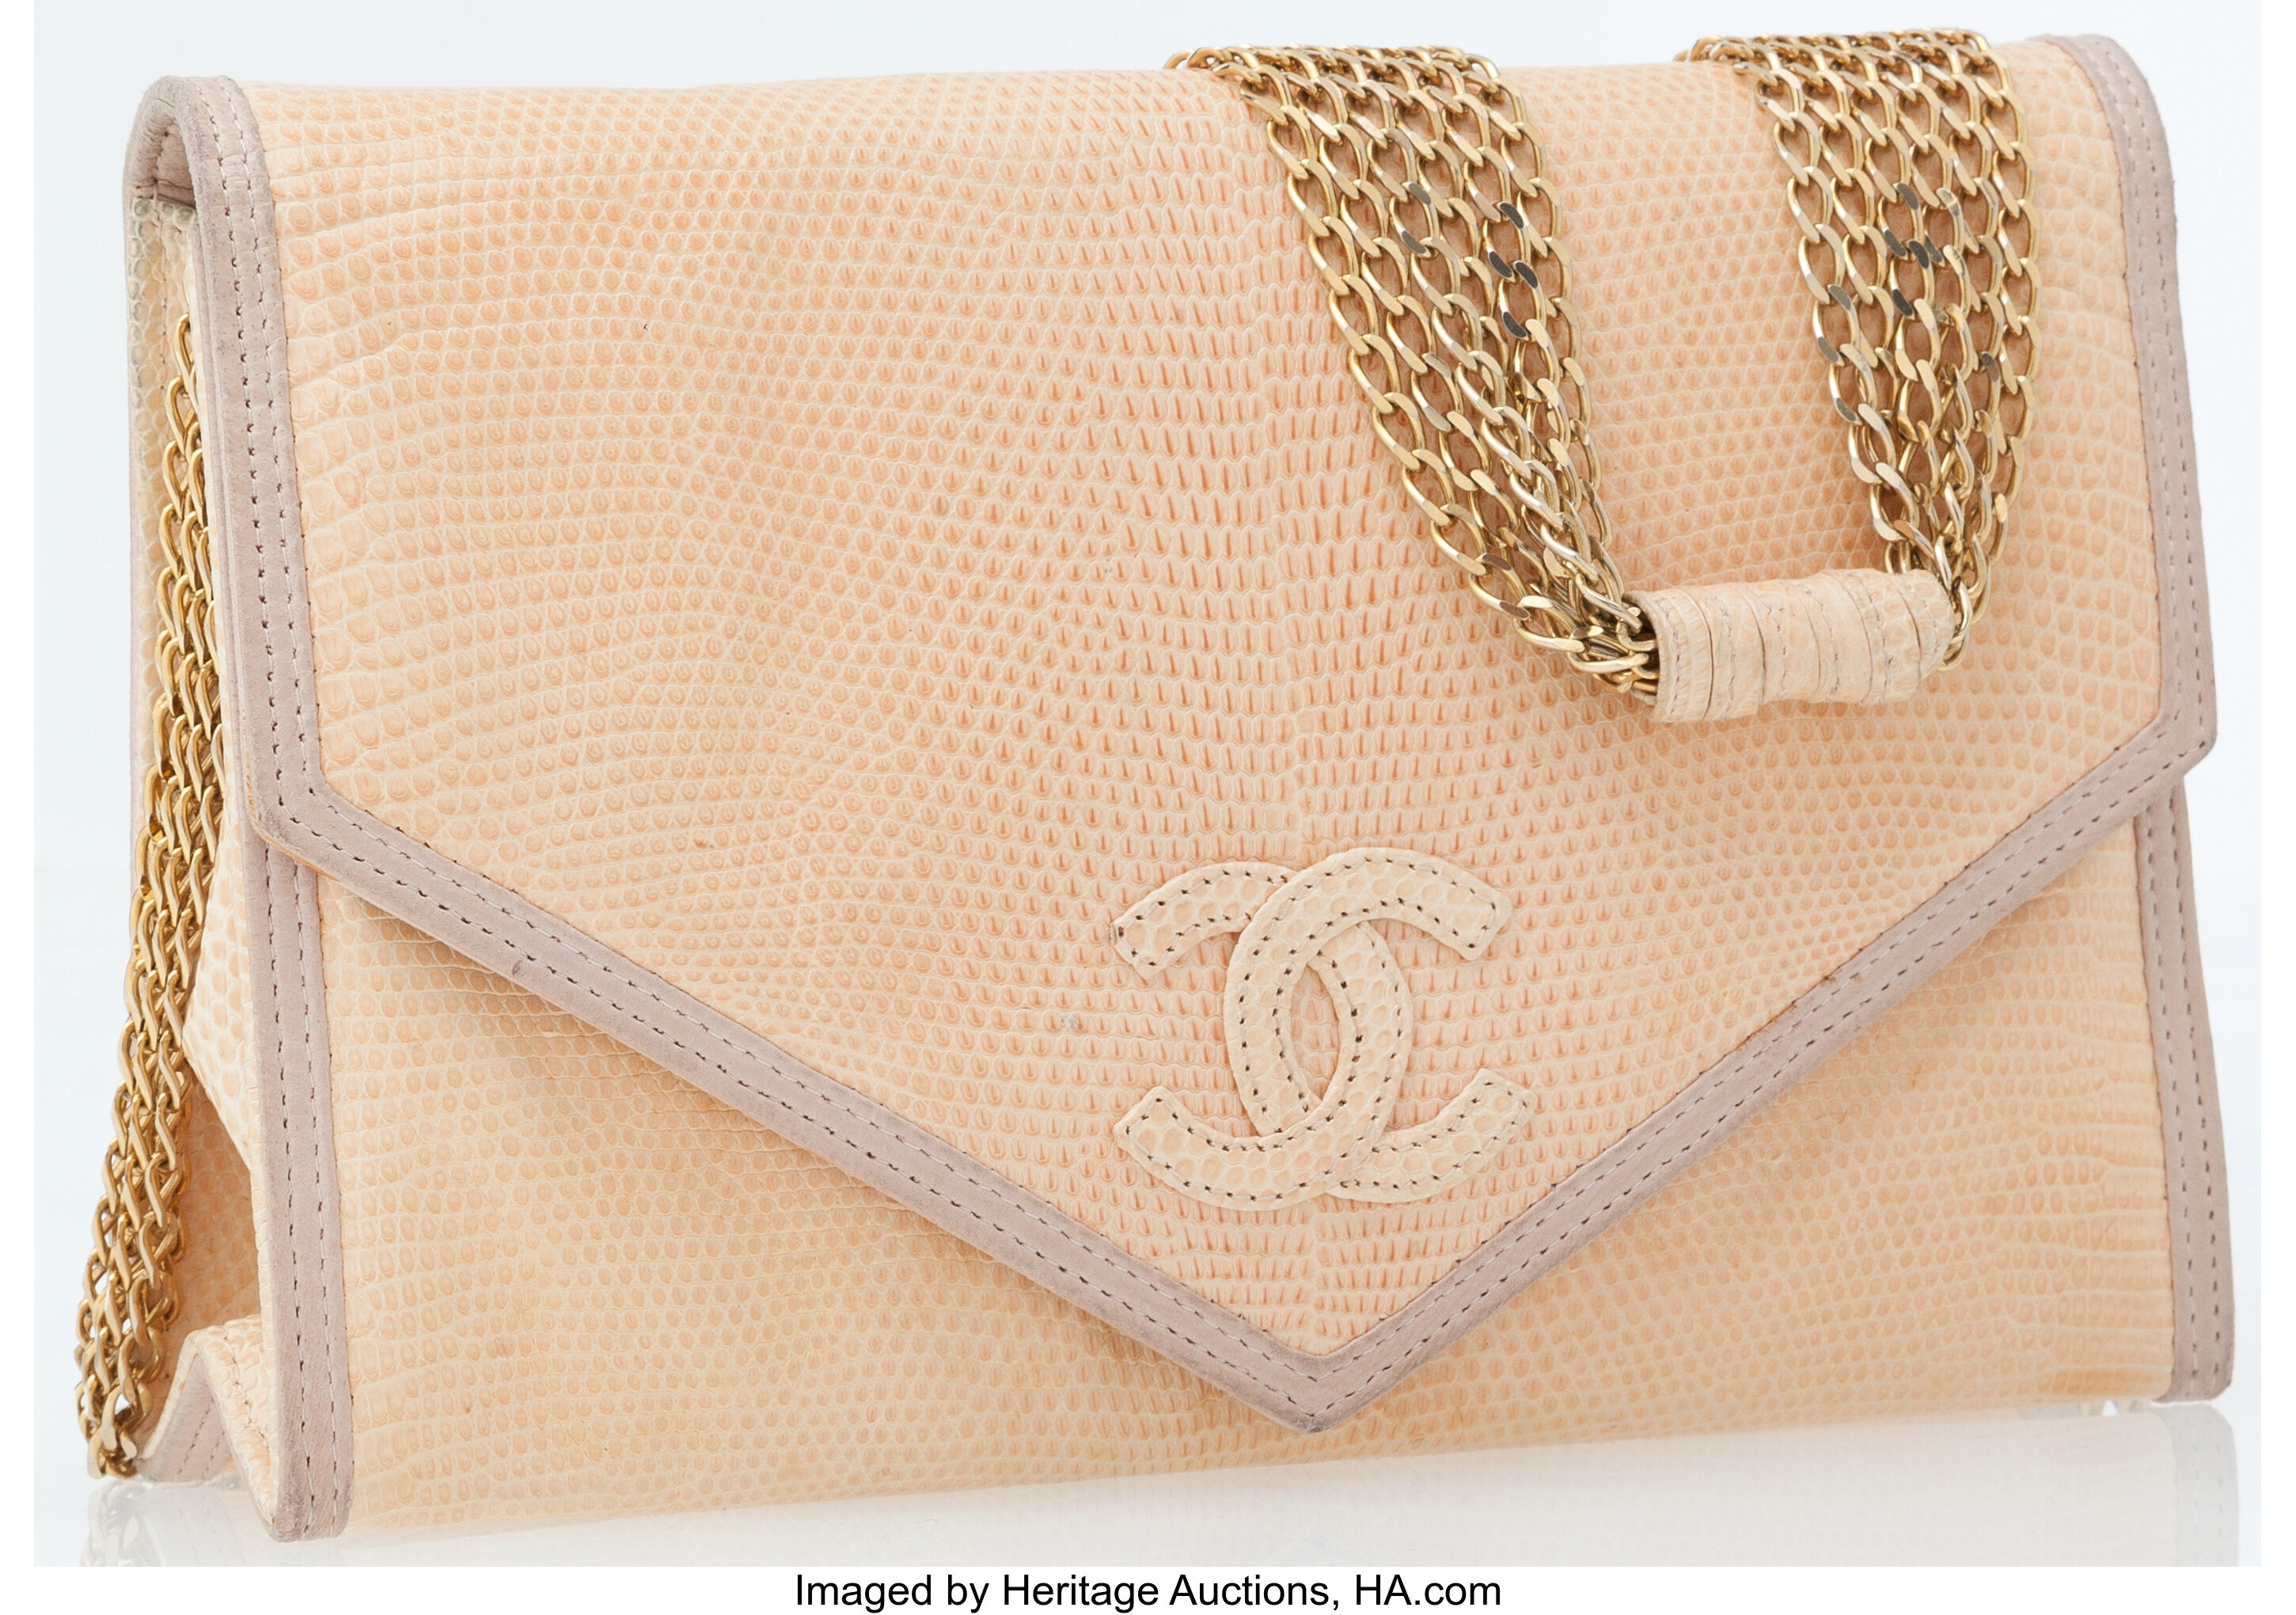 Chanel Peach Lizard Flap Bag with Gold Multi-Strand Chain Strap